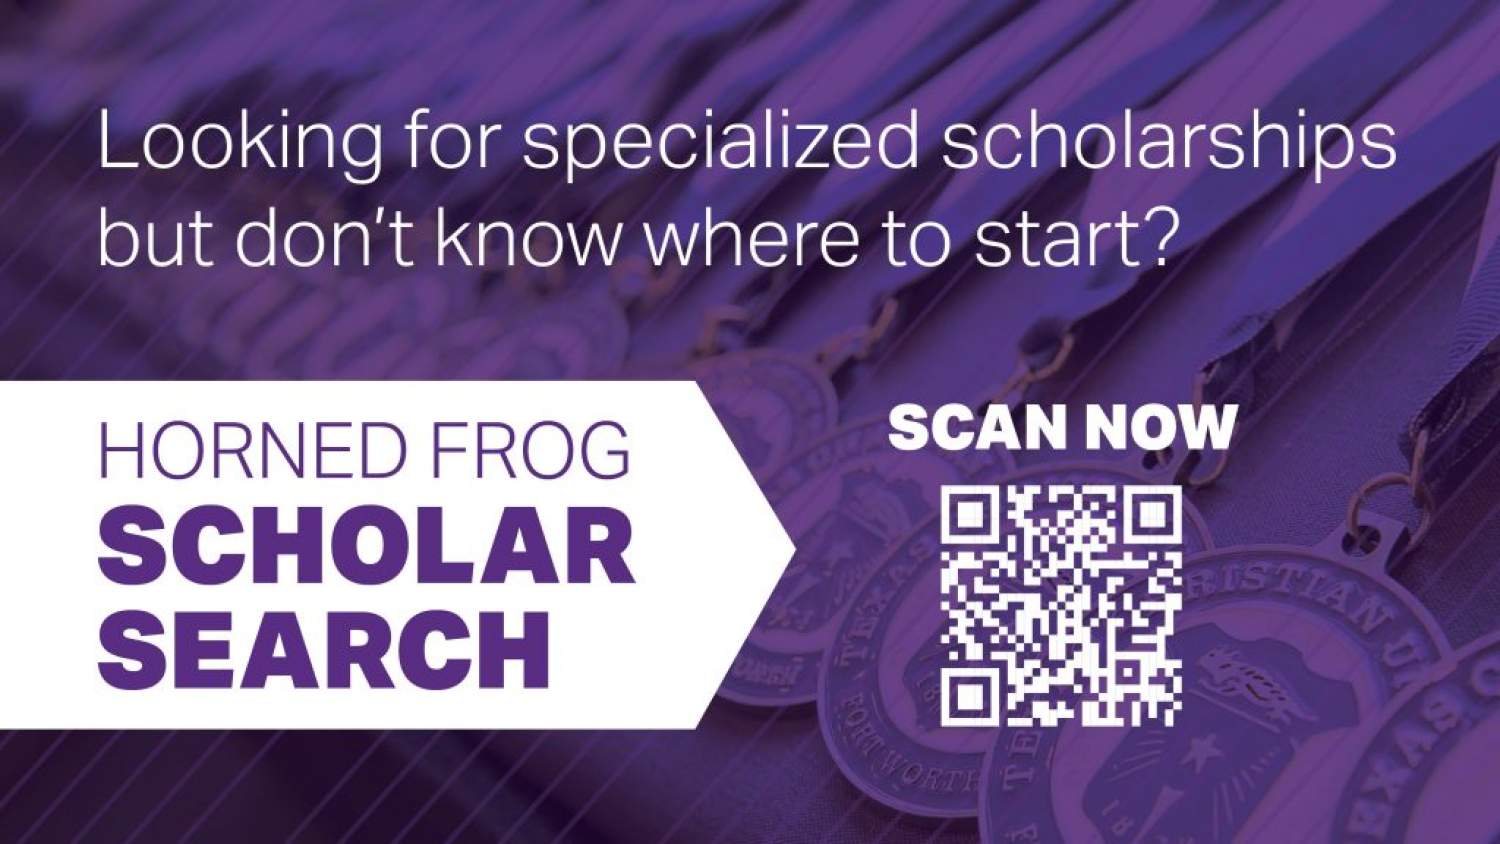 Scholar search